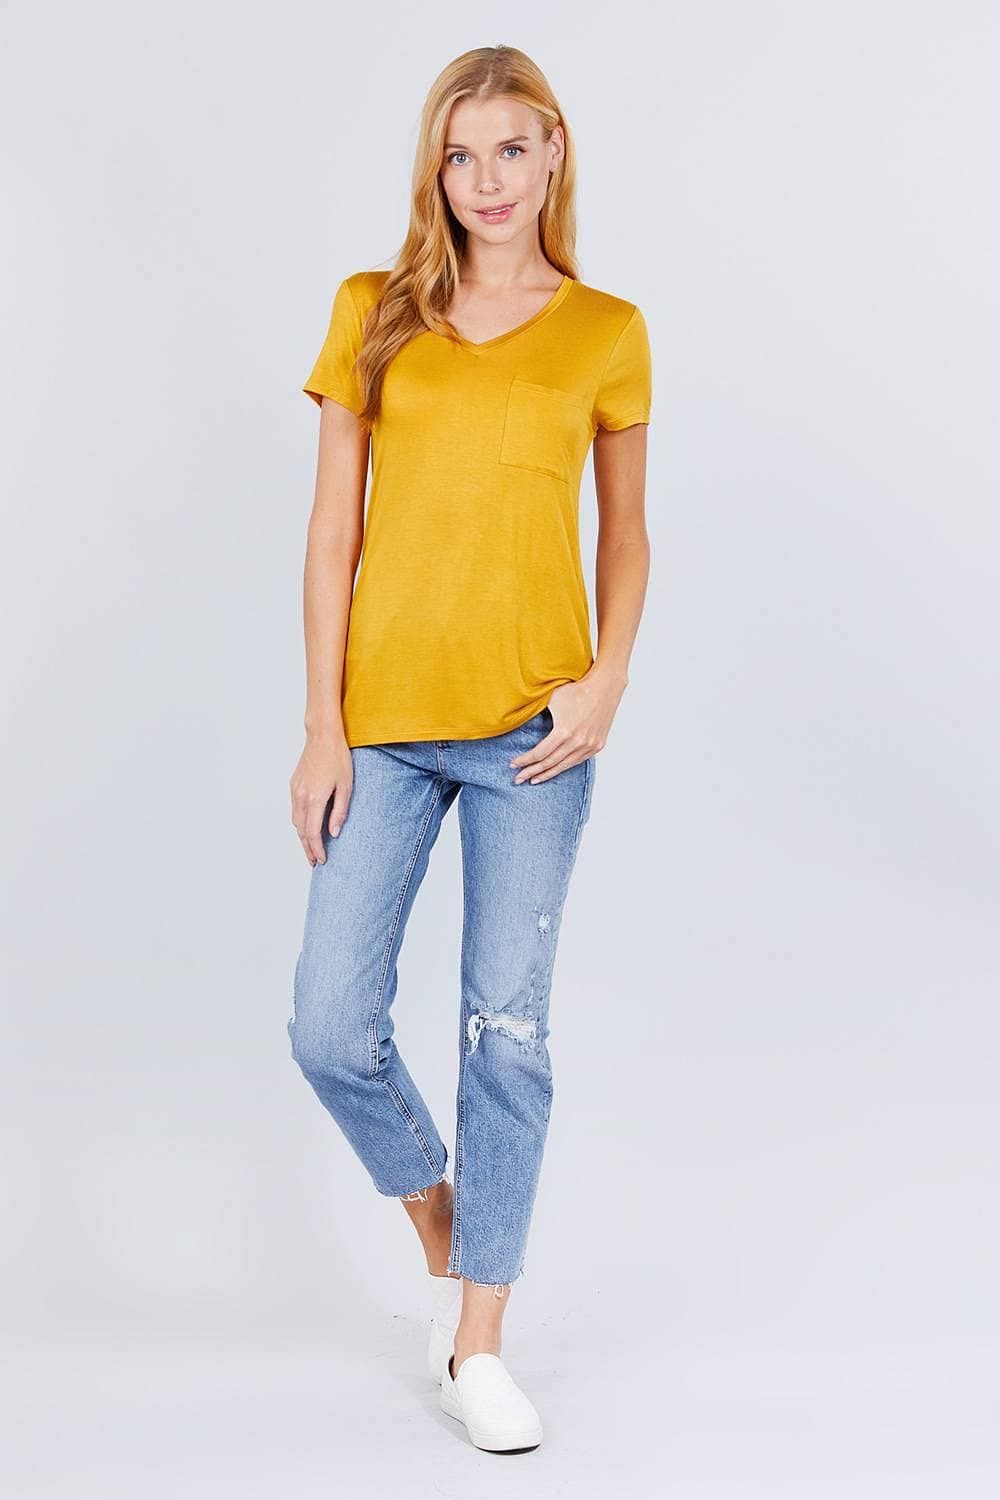 Mustard Short Sleeve V-Neck Rayon Jersey - Shopping Therapy, LLC Tops